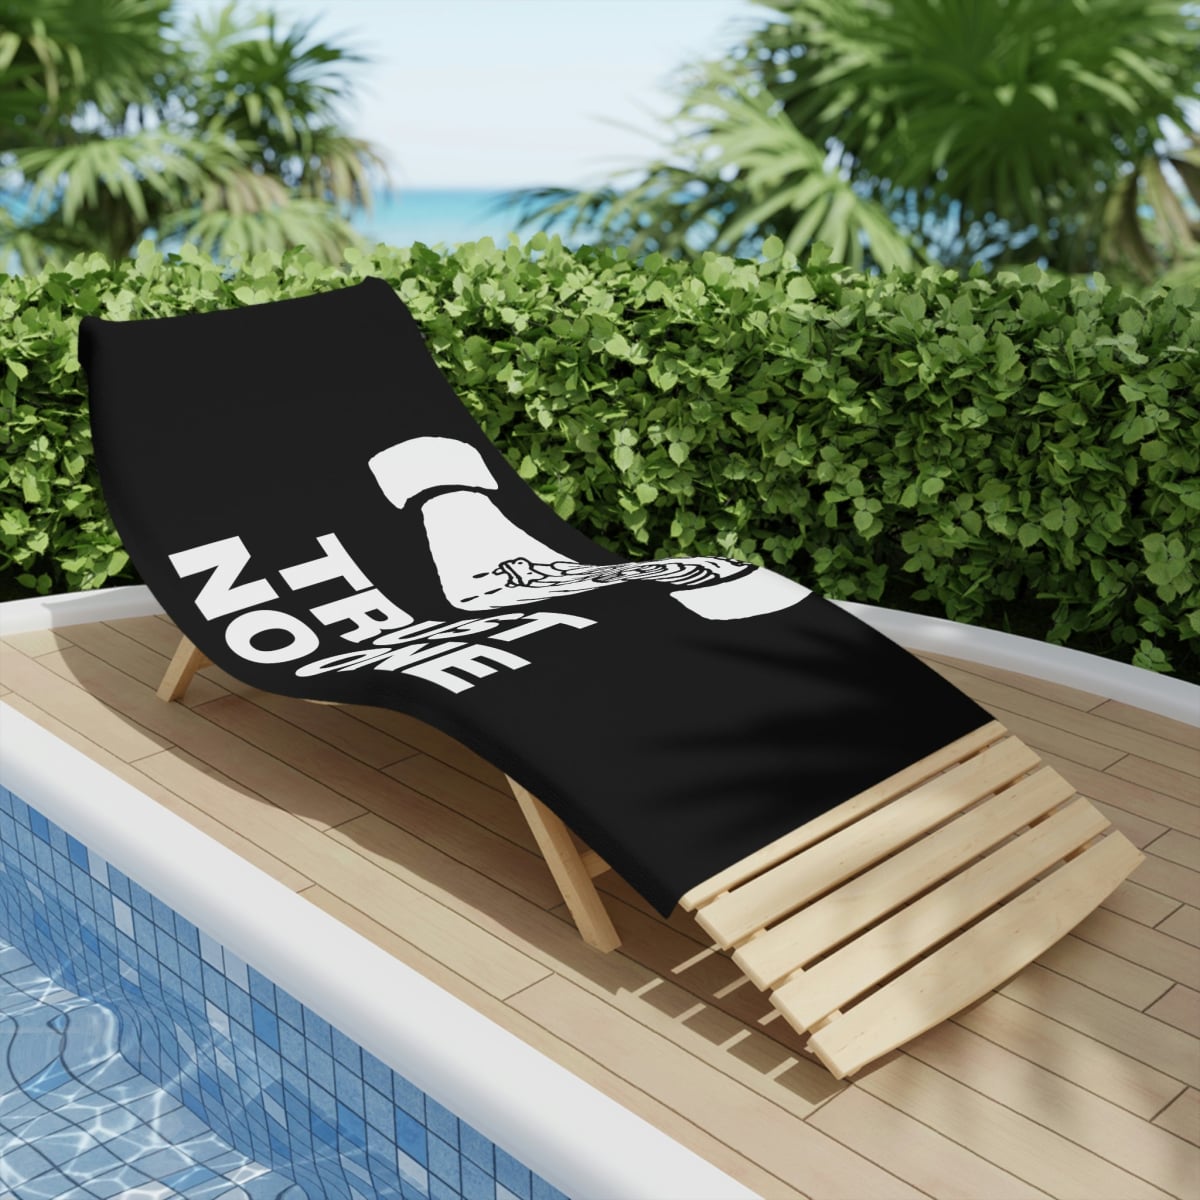 Trust No One Beach Towels